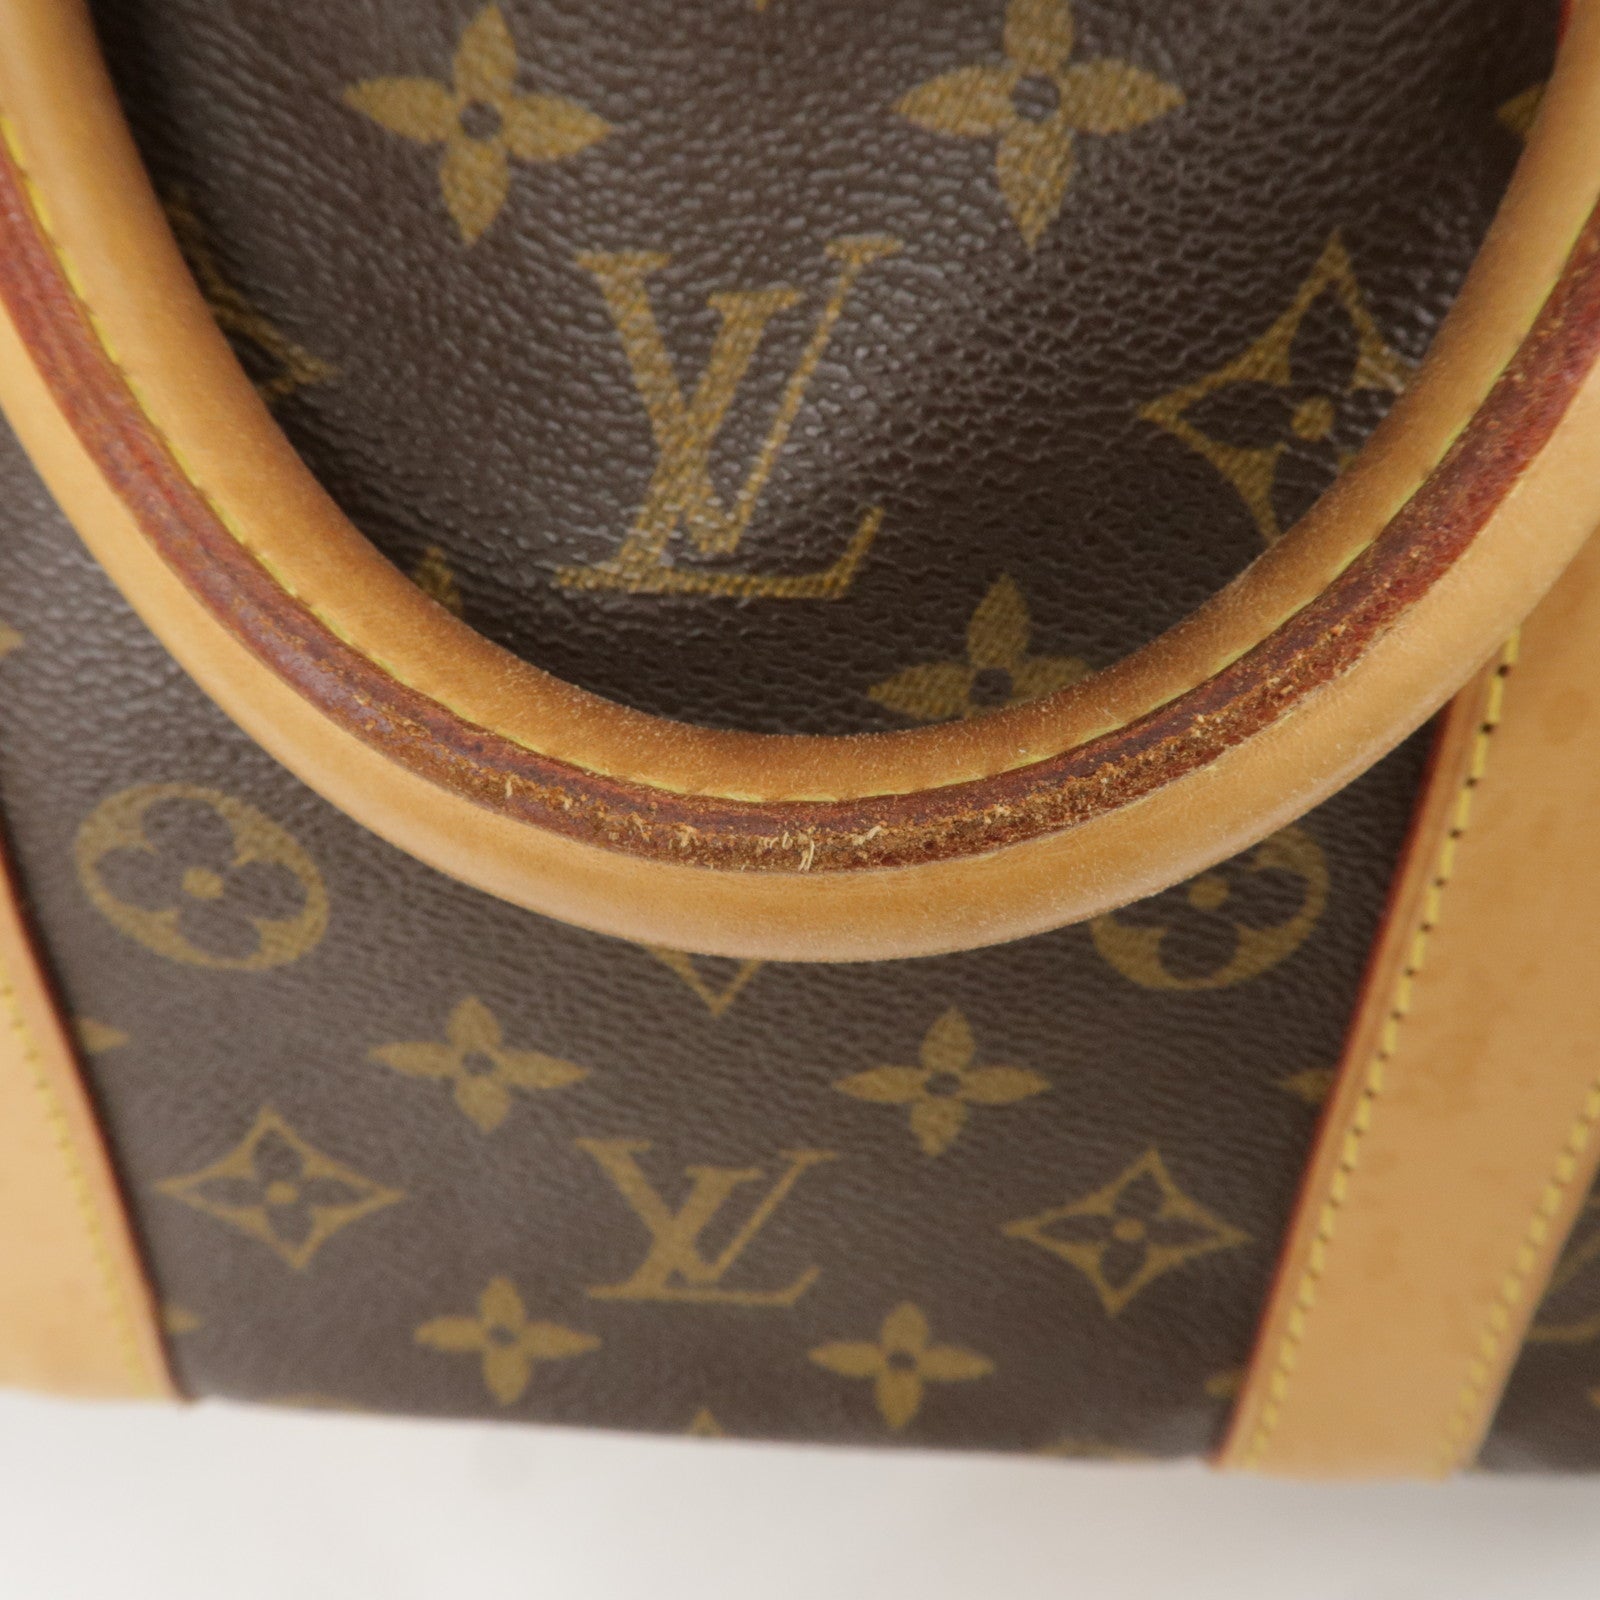 Auth Louis Vuitton Monogram Keep All 55 Boston Bag M41424 Used